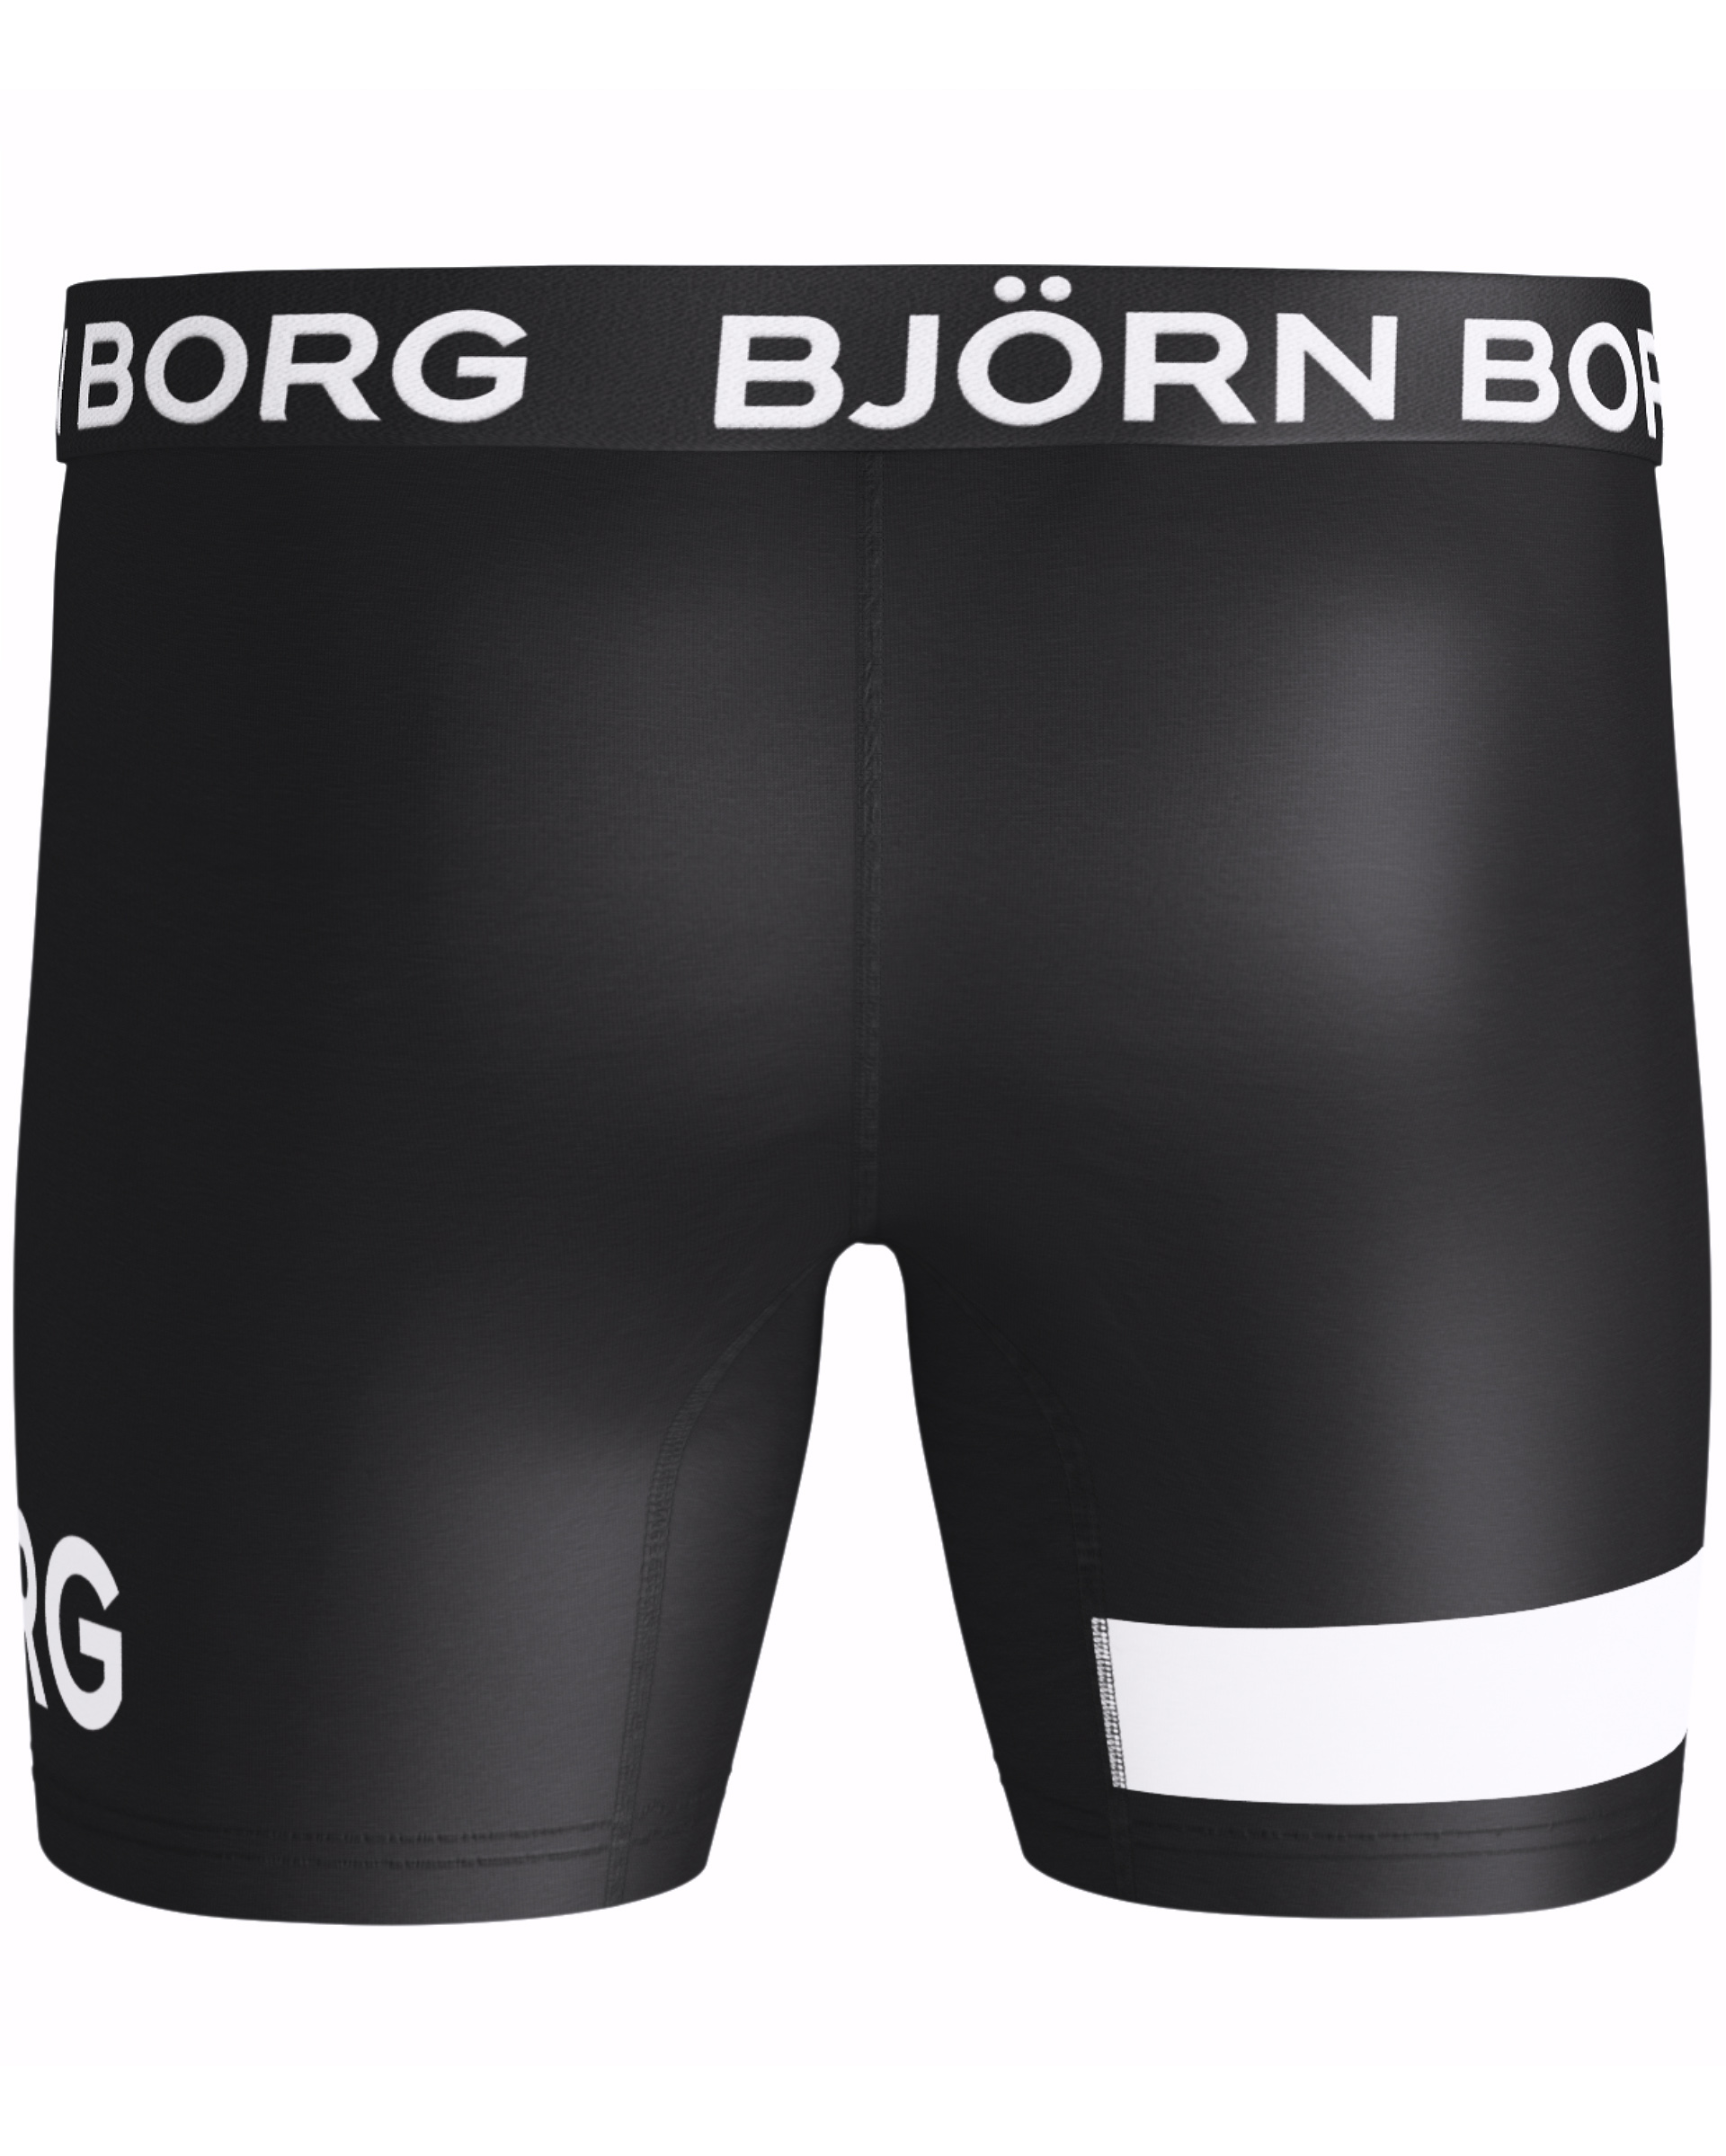 Bjorn Borg Shorts Per Court Borg - Black